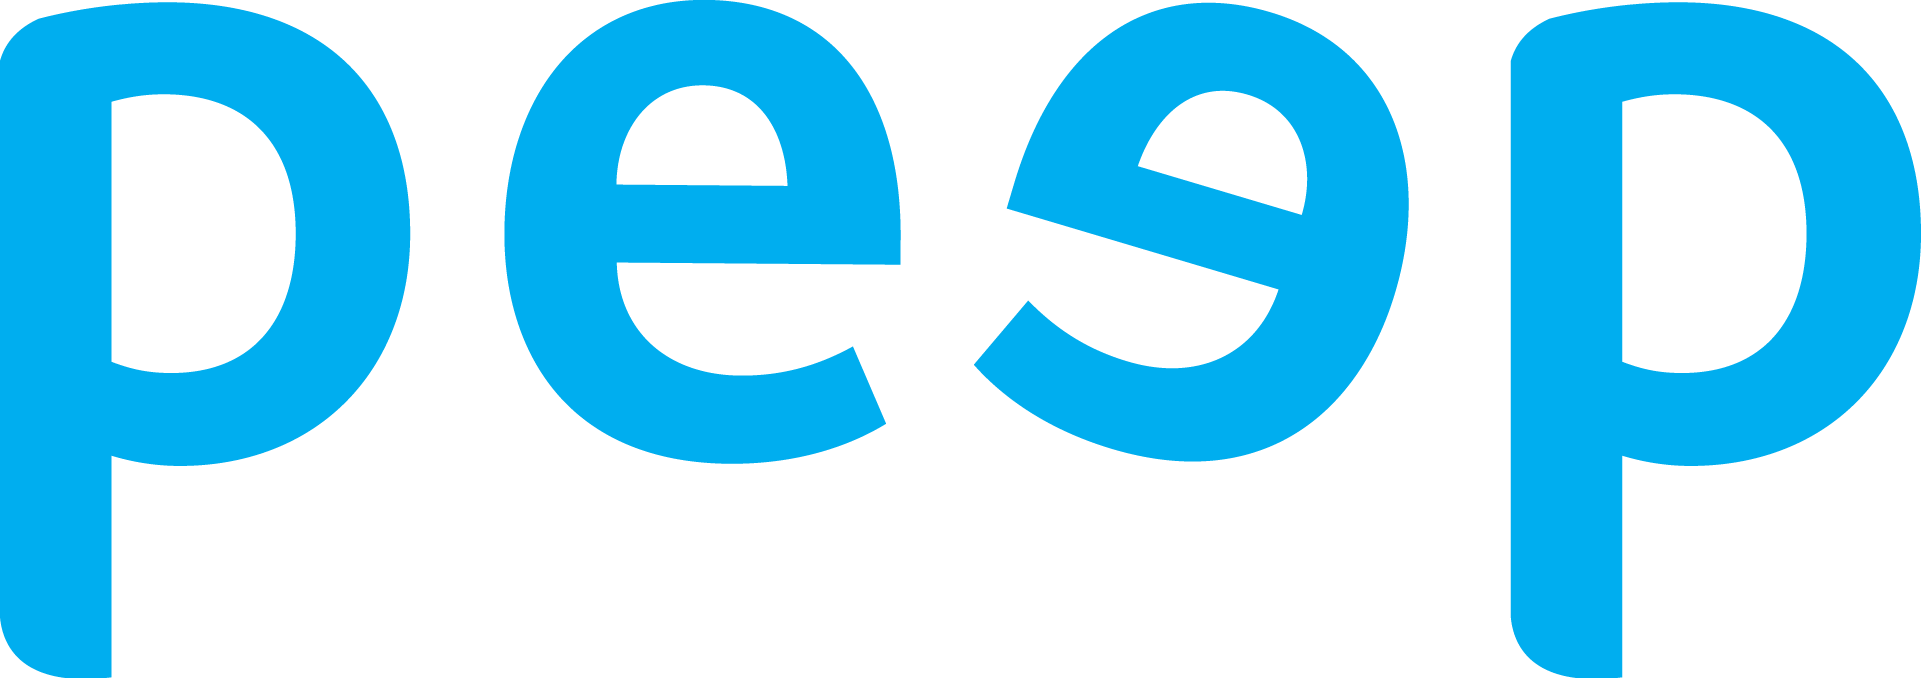 Peep logo cyan 1